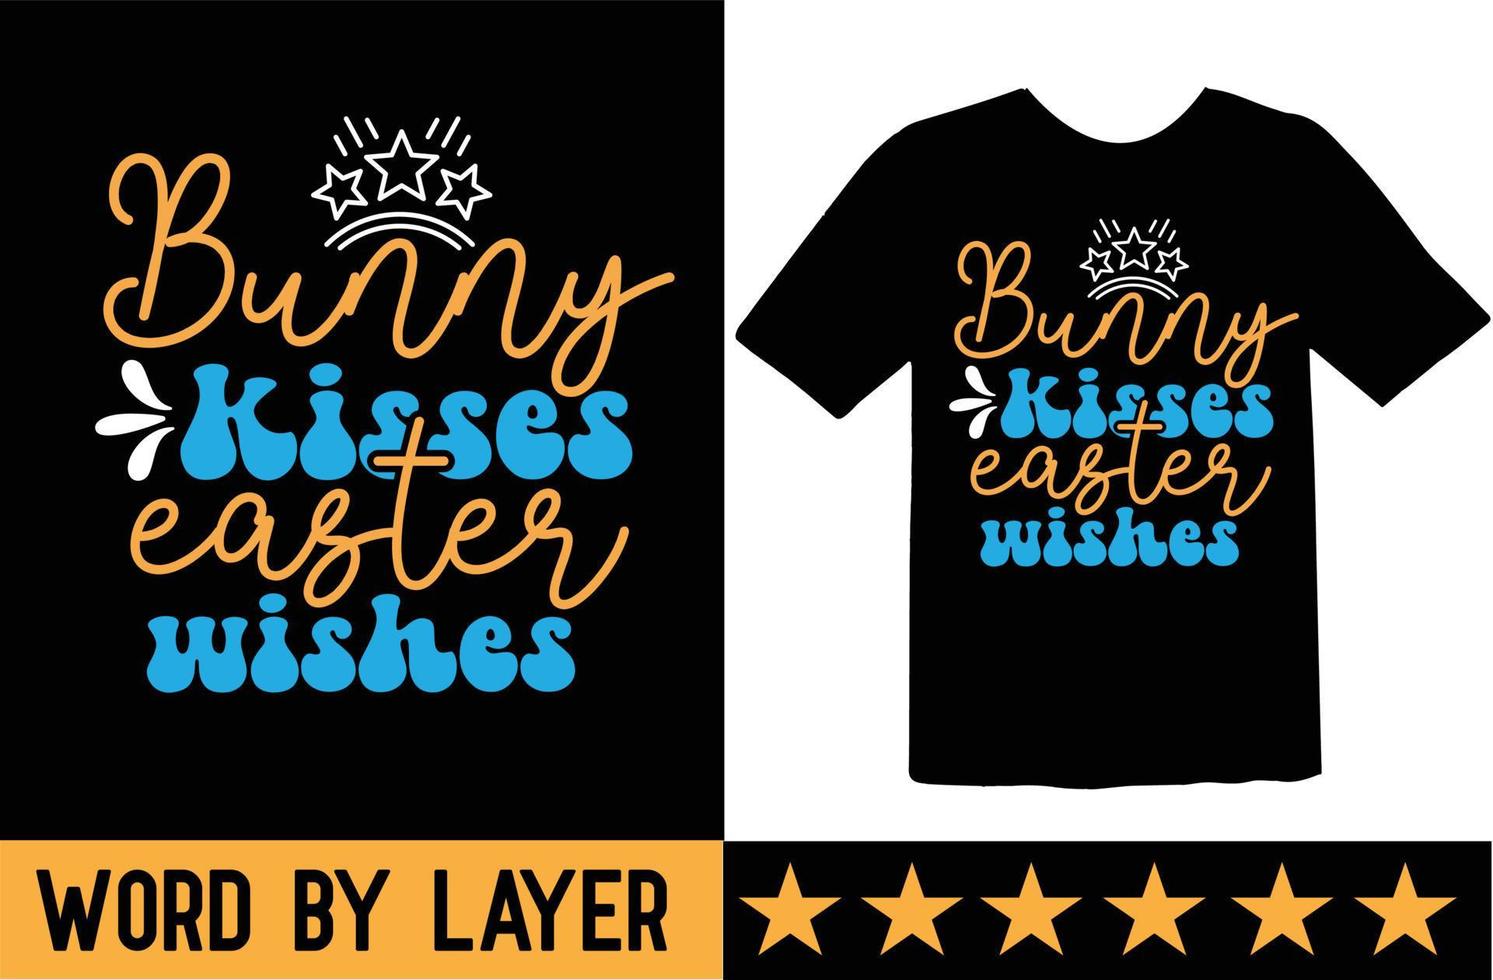 Bunny Kisses Easter Wishes svg t shirt design vector